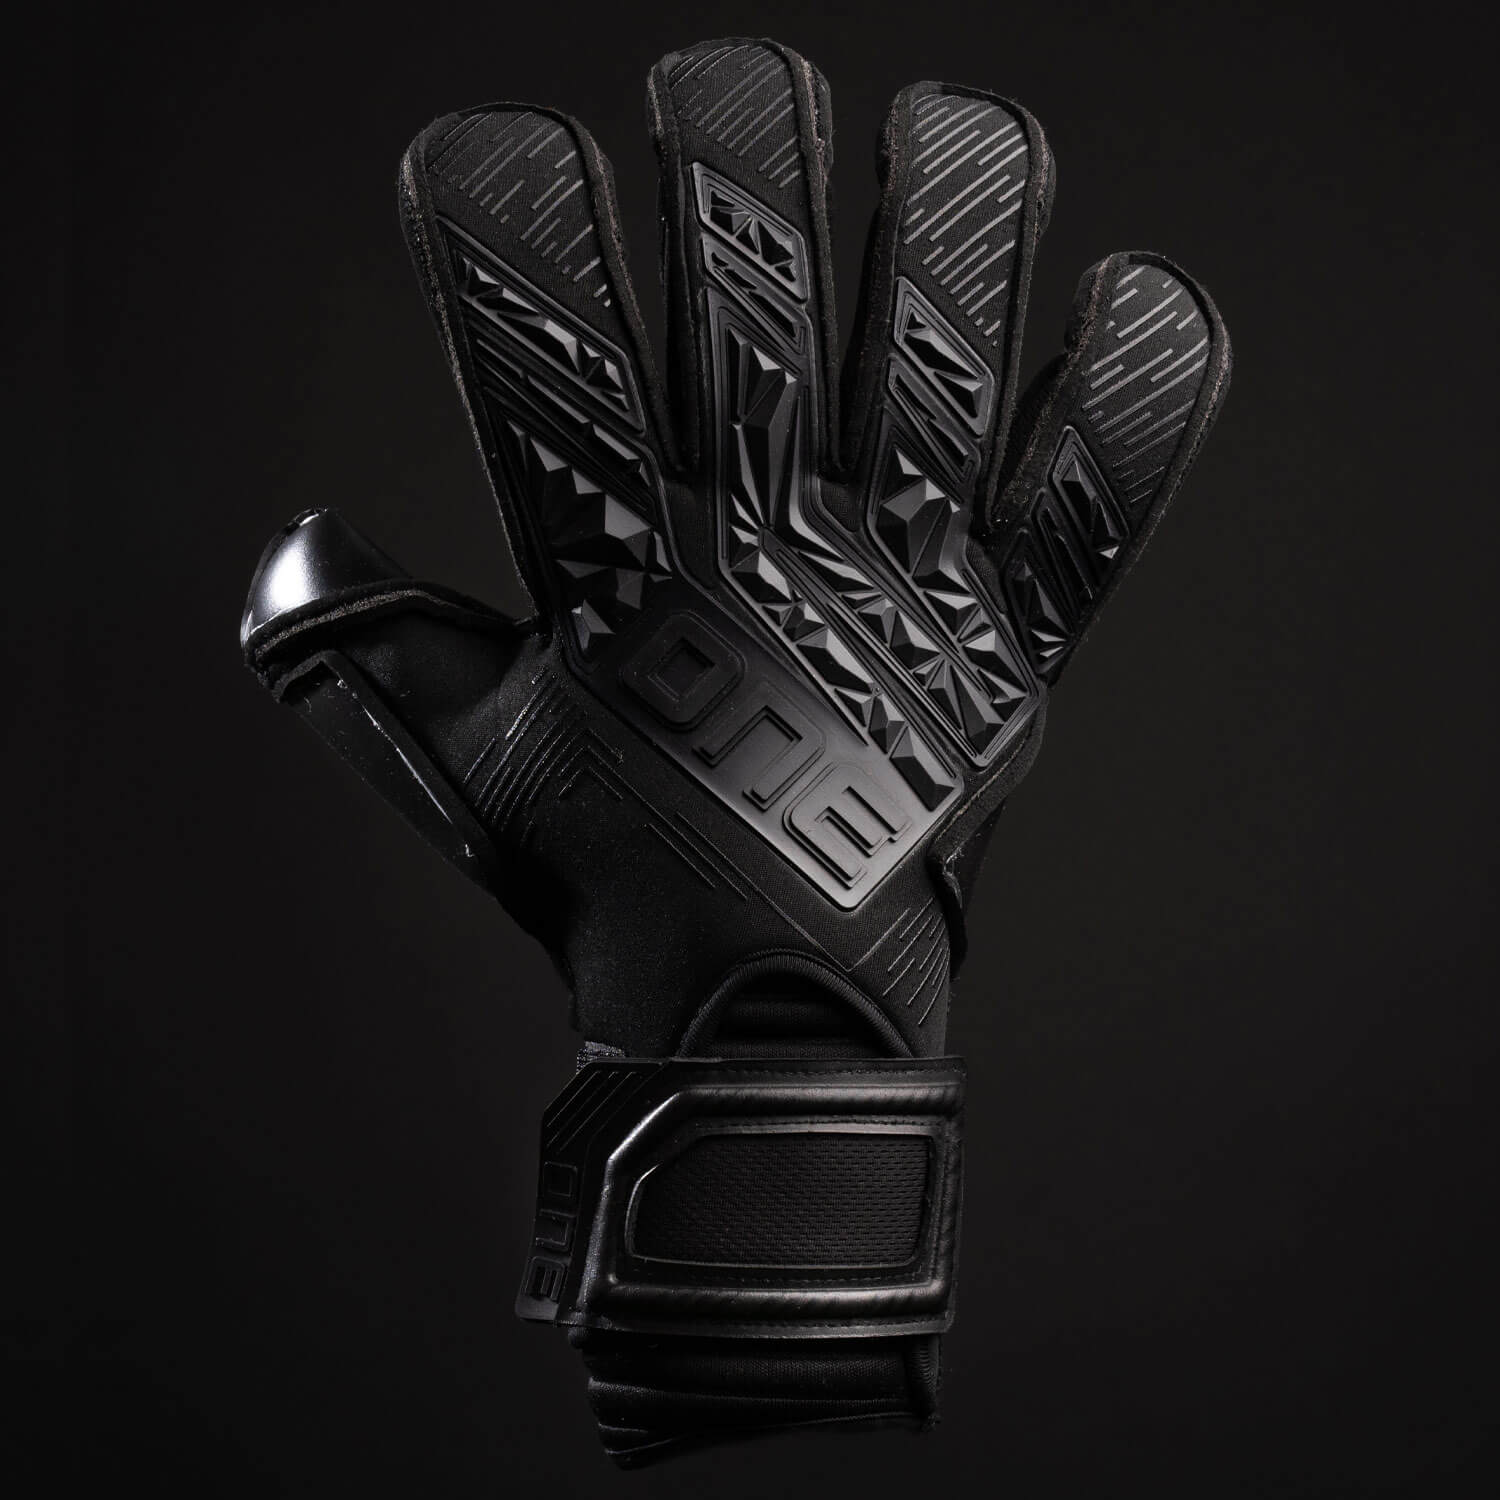 APEX Pro PowerBeast, Negative Cut Goalkeeper Gloves